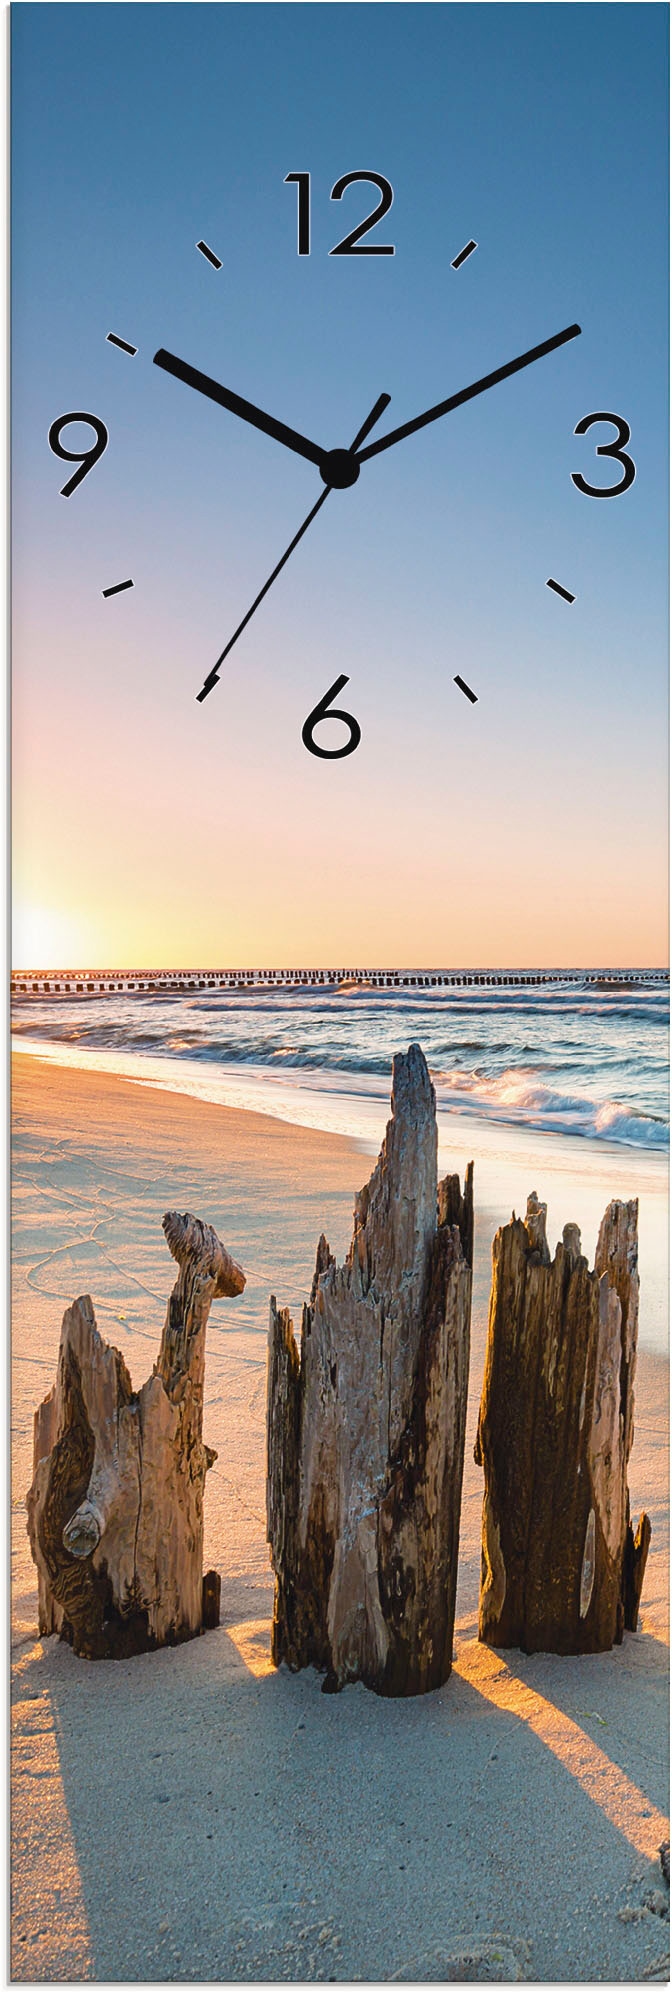 Artland Wanduhr »Glasuhr Sonnenuntergang Strand Wellenbrecher«, wahlweise  mit Quarz- oder Funkuhrwerk, lautlos ohne Tickgeräusche | BAUR | Wanduhren